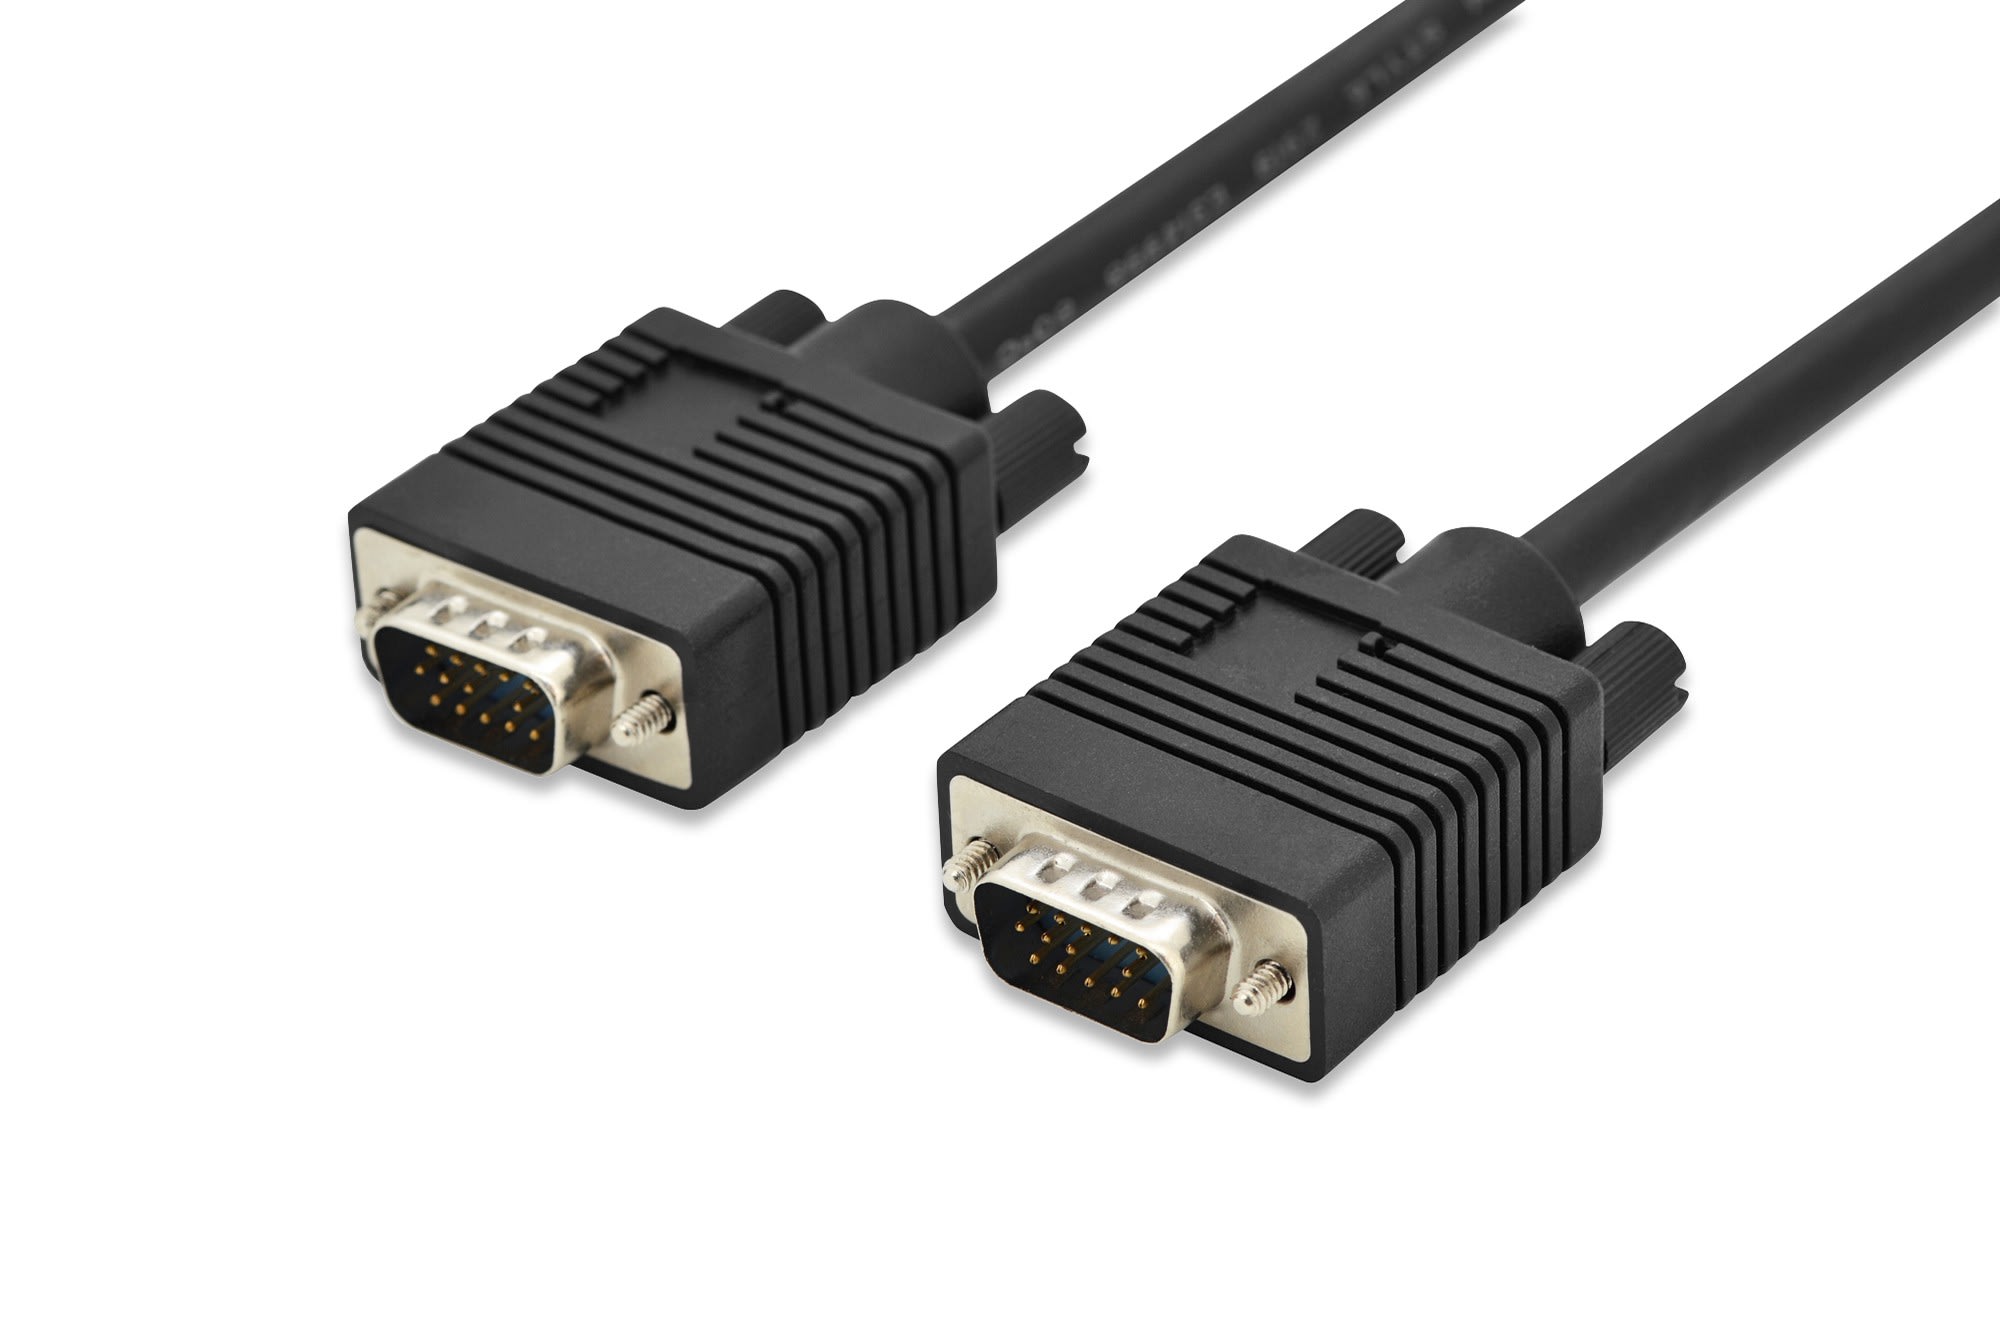 Assmann Electronic - VGA Monitor connection cable, HD15 M-M, 3.0m, 3Coax-7C, 2xferrite, bl